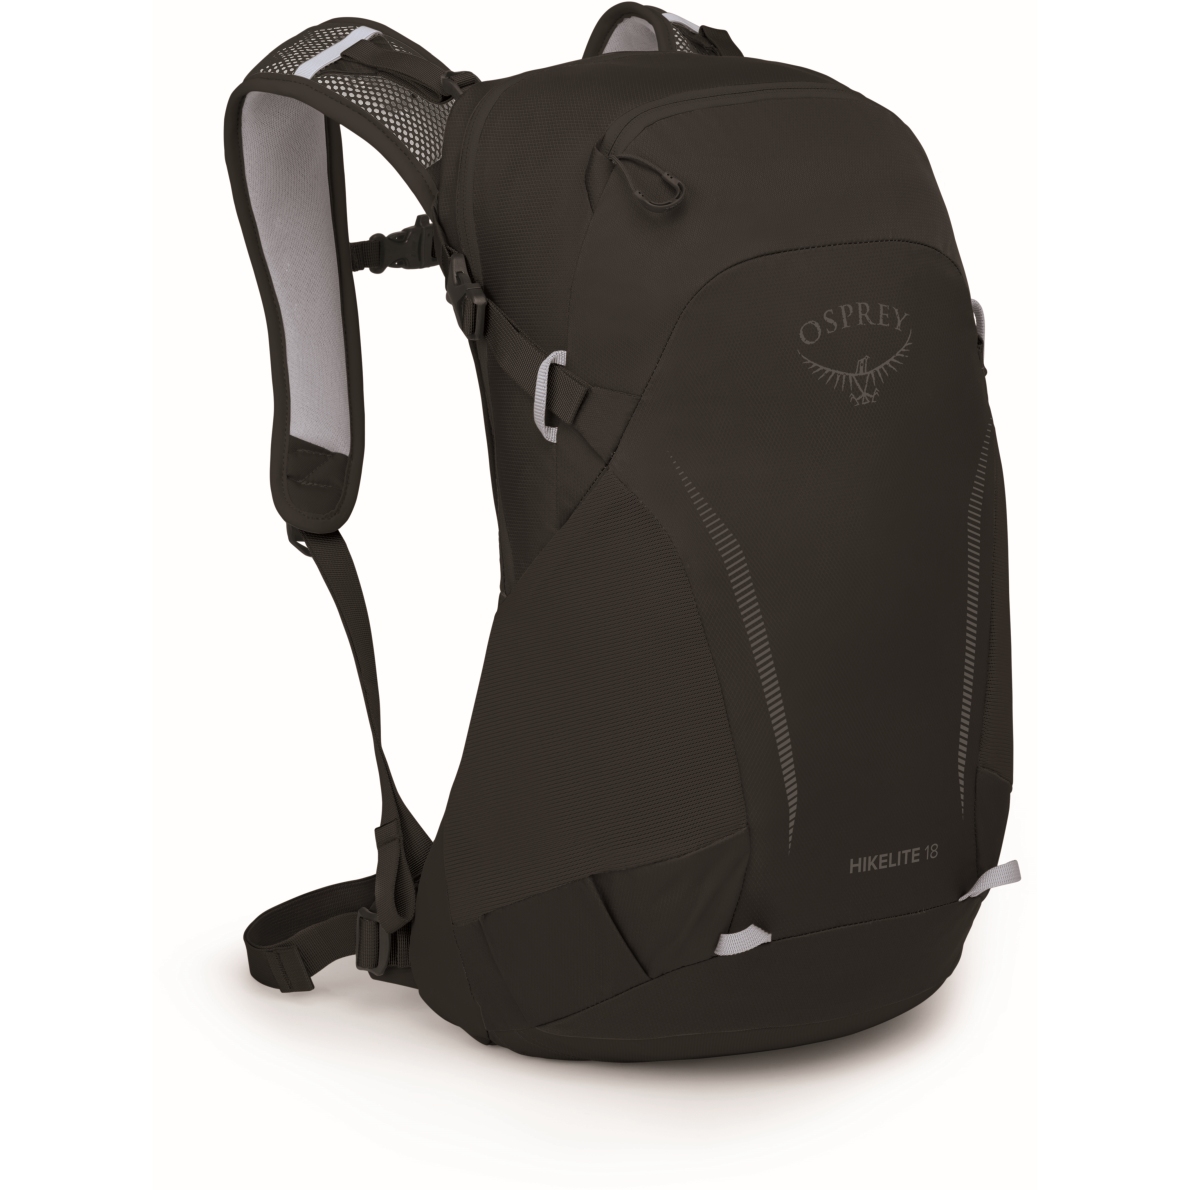 Picture of Osprey Hikelite 18 Backpack - Black